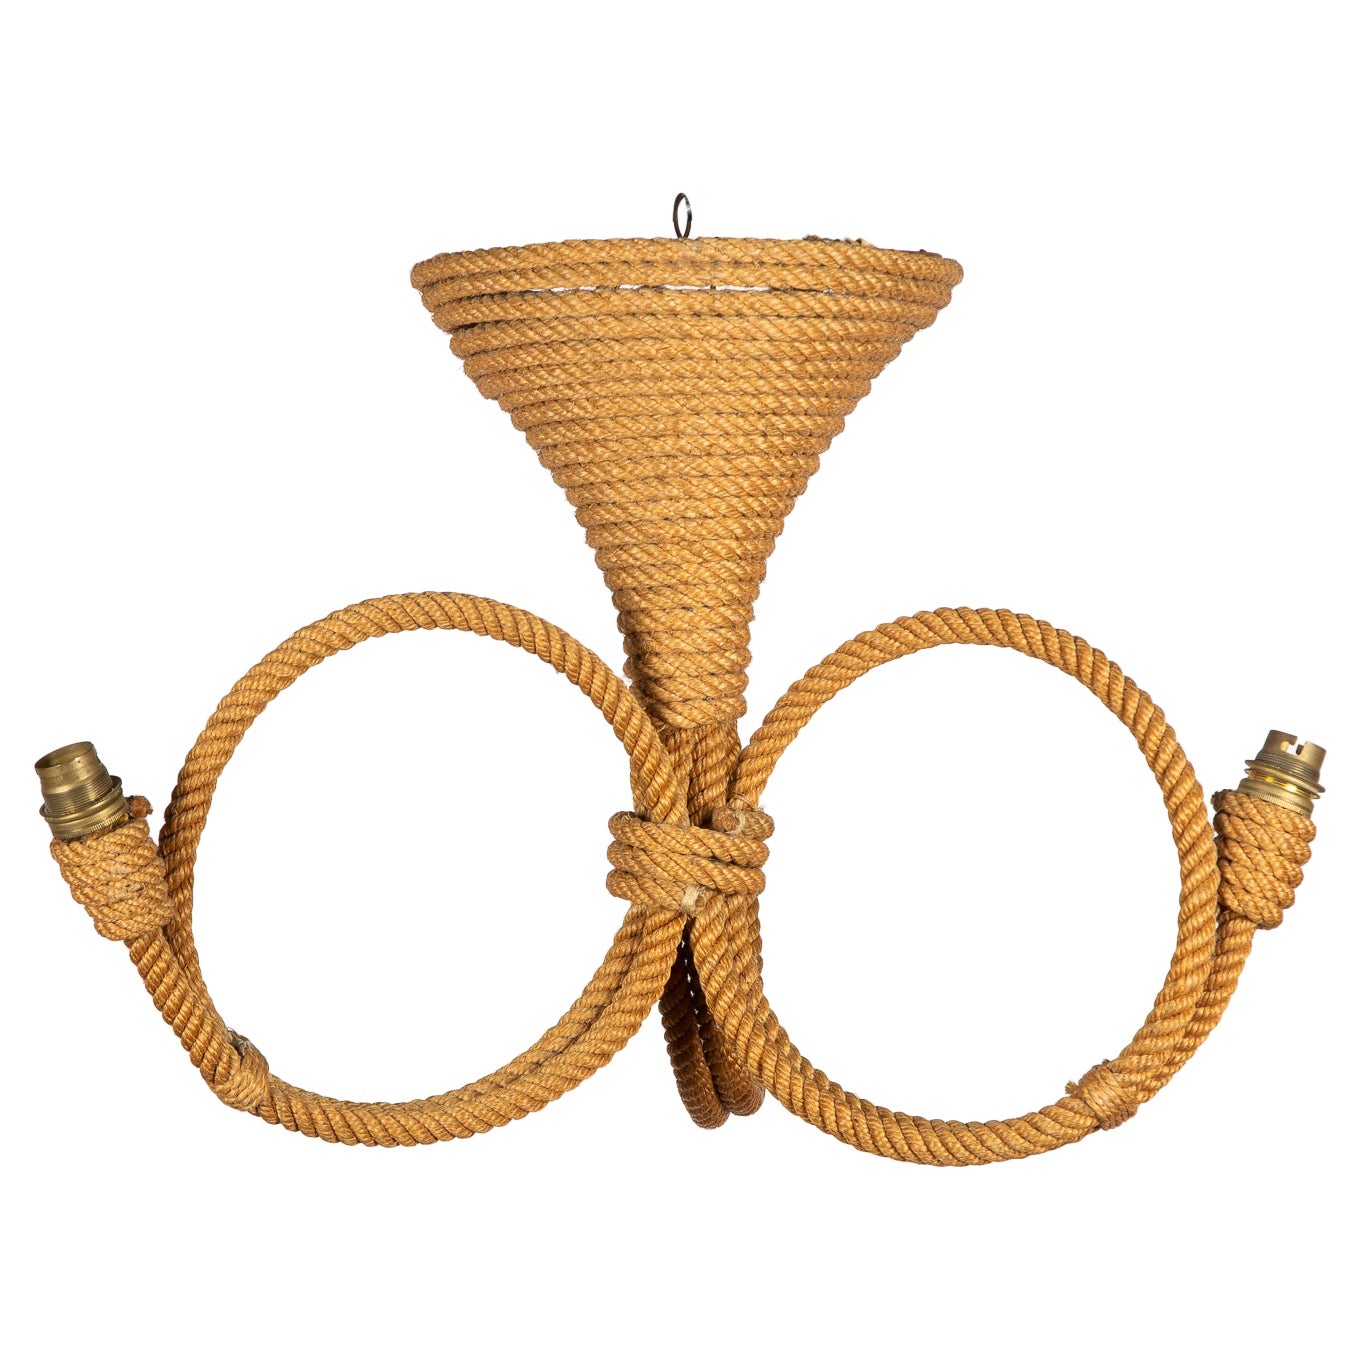 Ropework Chandelier by Audoux & Minet of Golfe-Juan